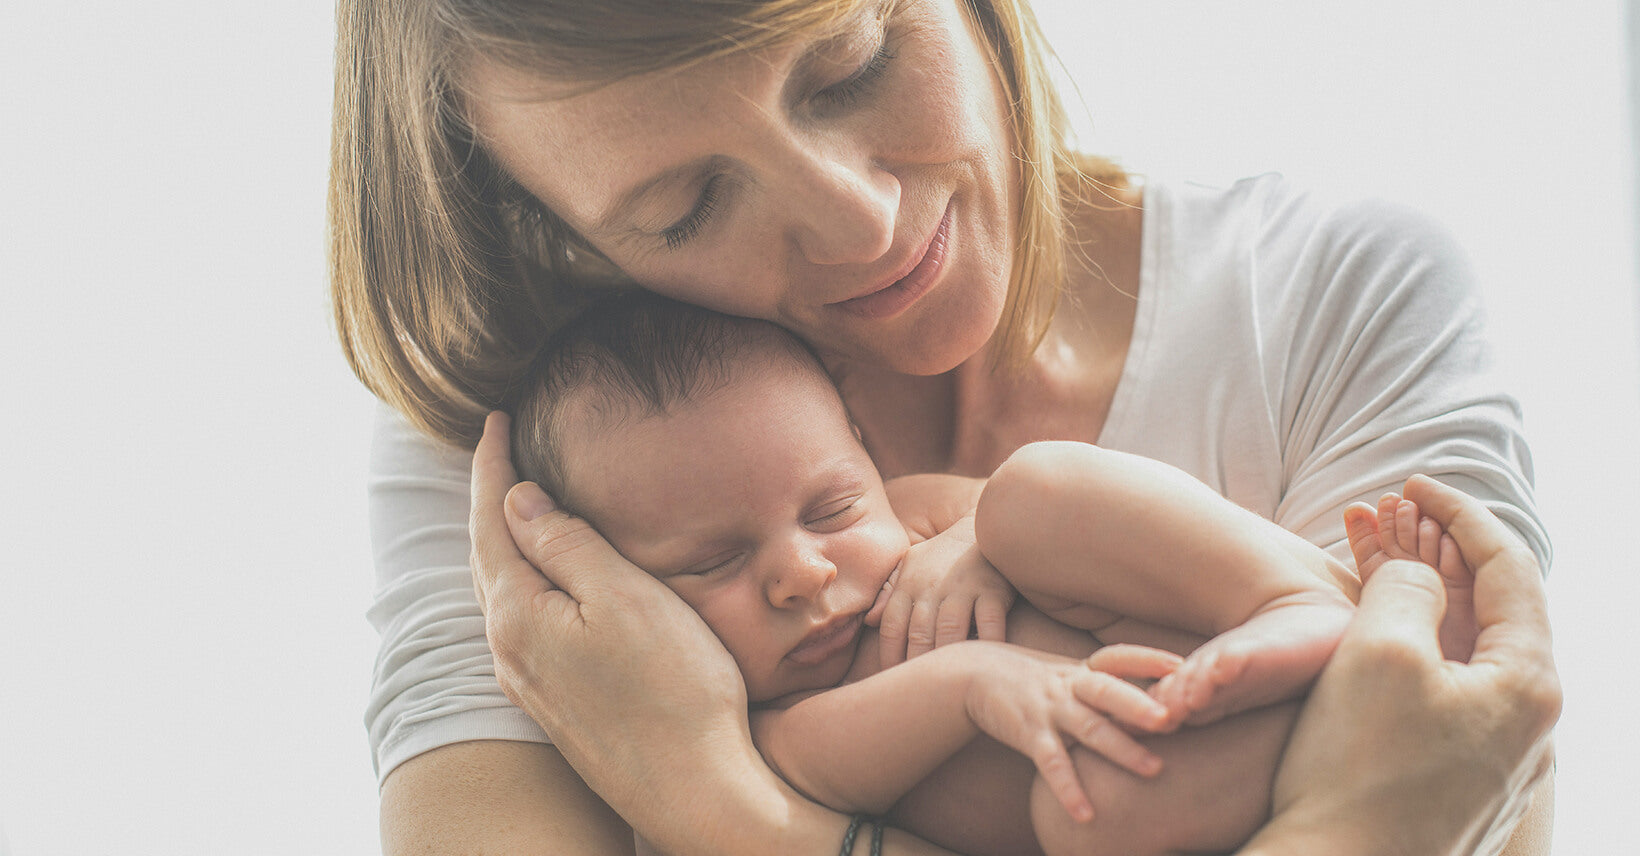 Should You Sleep Train Your Baby?